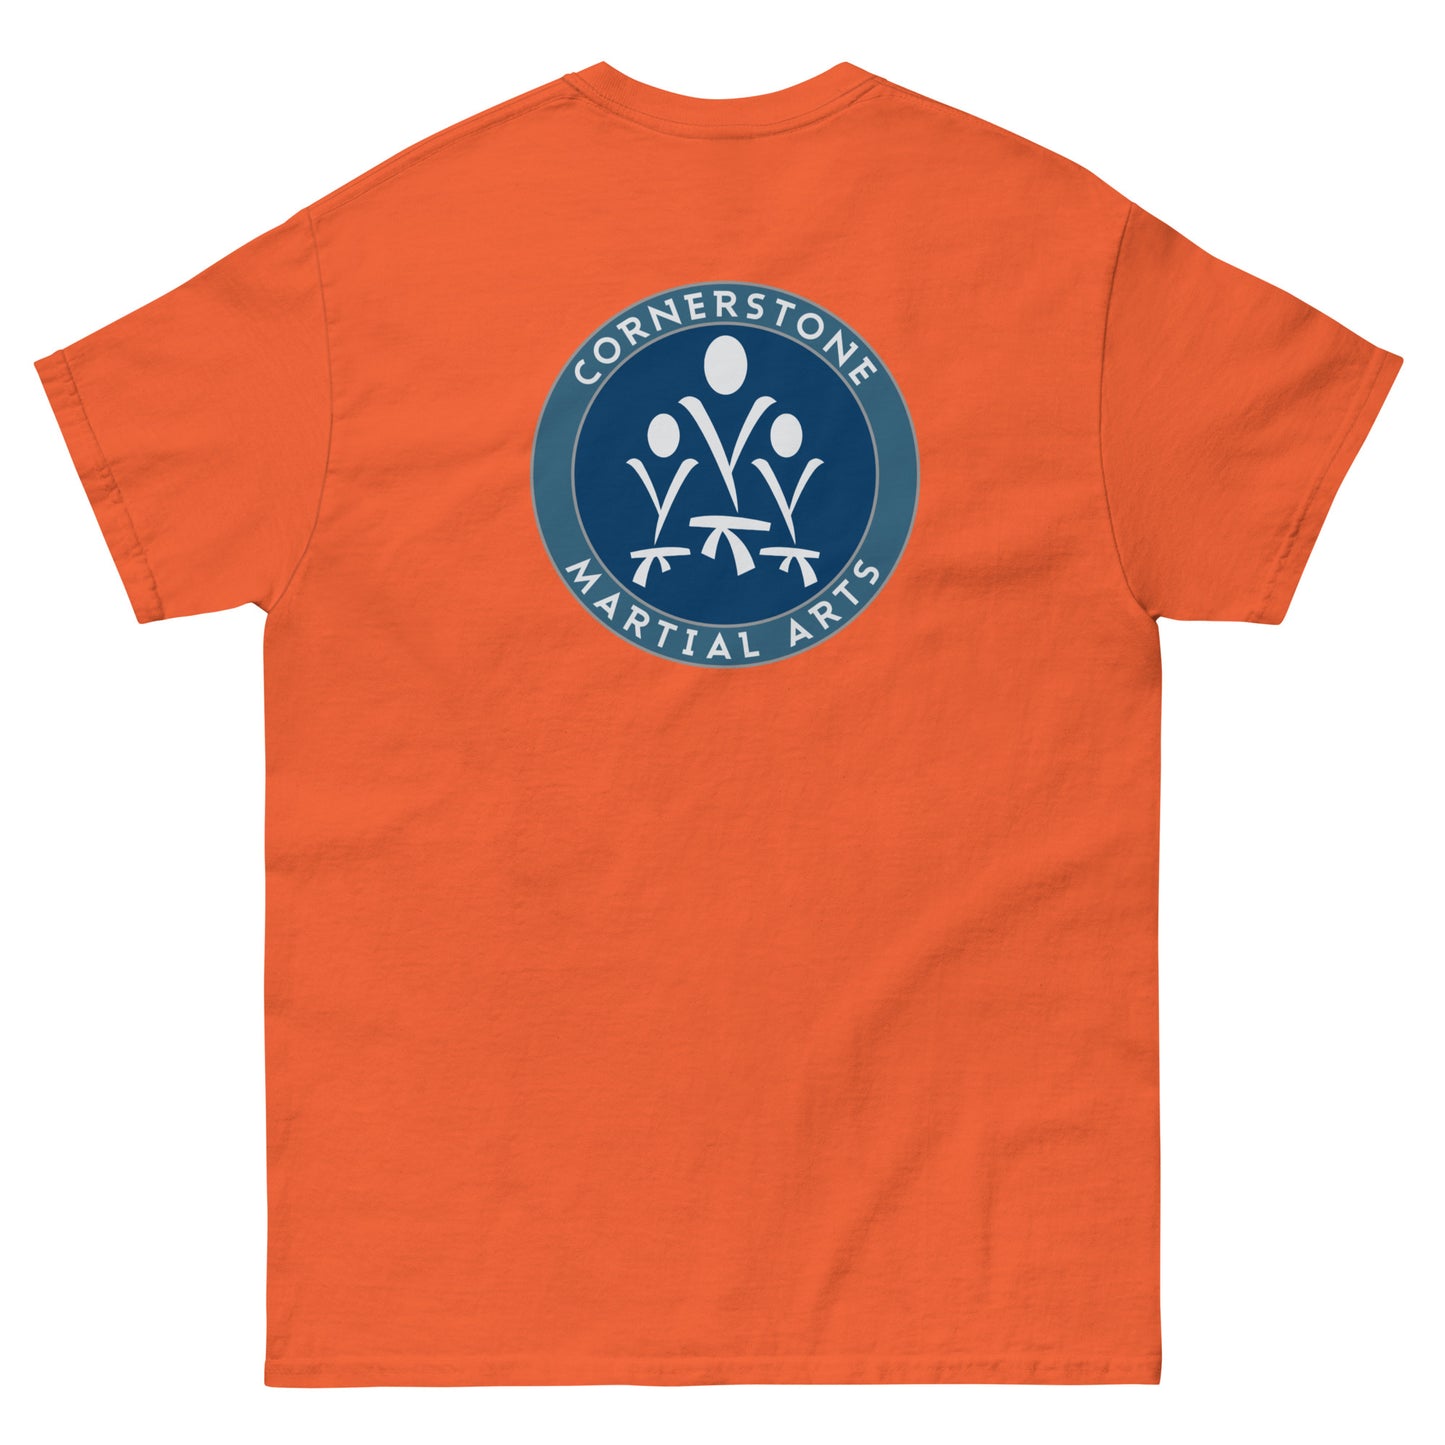 Orange Belt Unisex Cotton T-Shirt